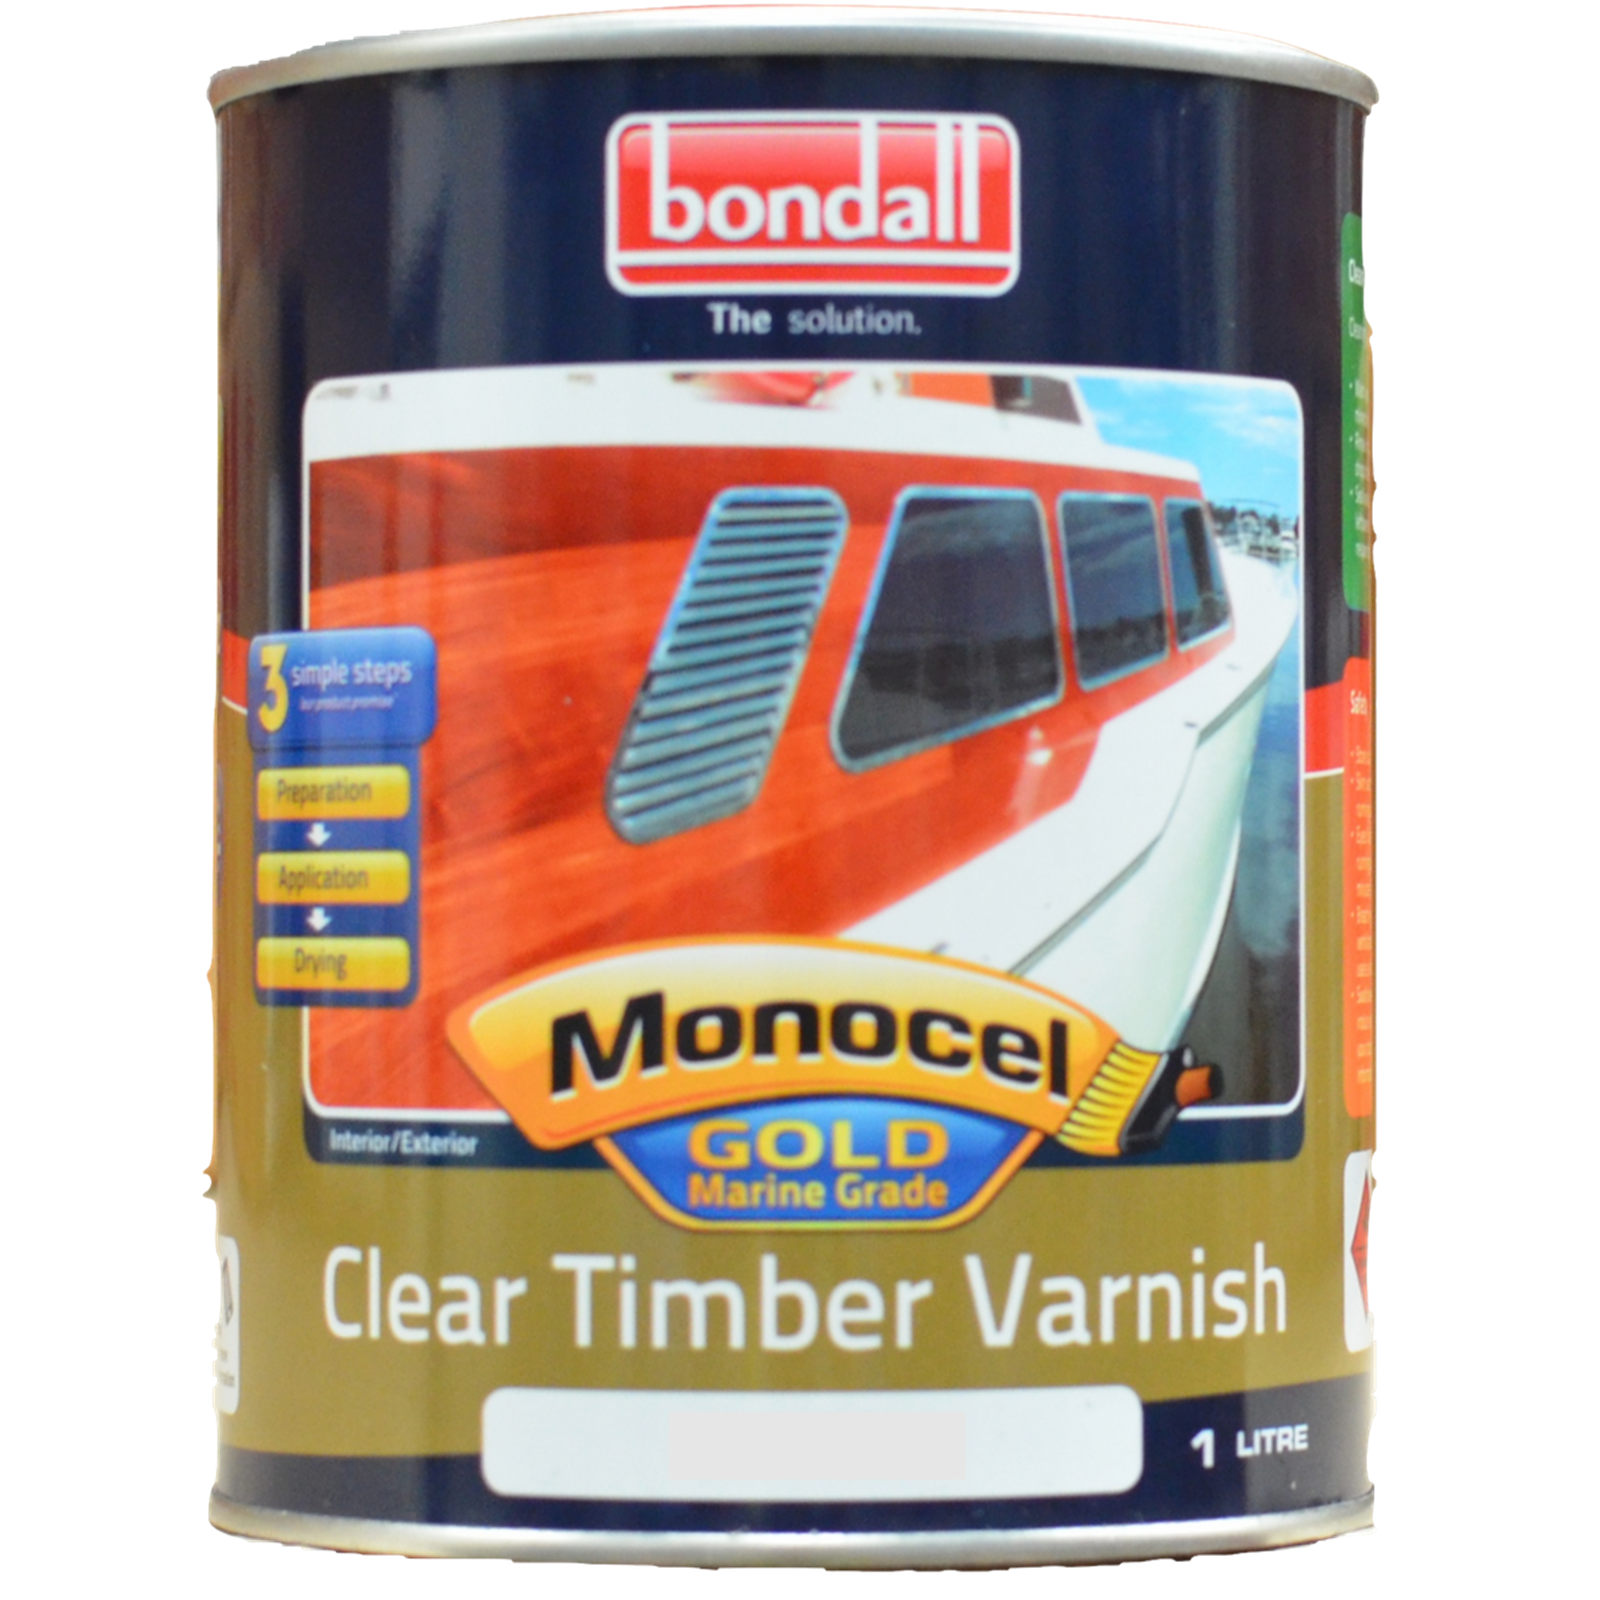 Bondall 1L Gloss Monocel Gold Marine Clear Timber Varnish